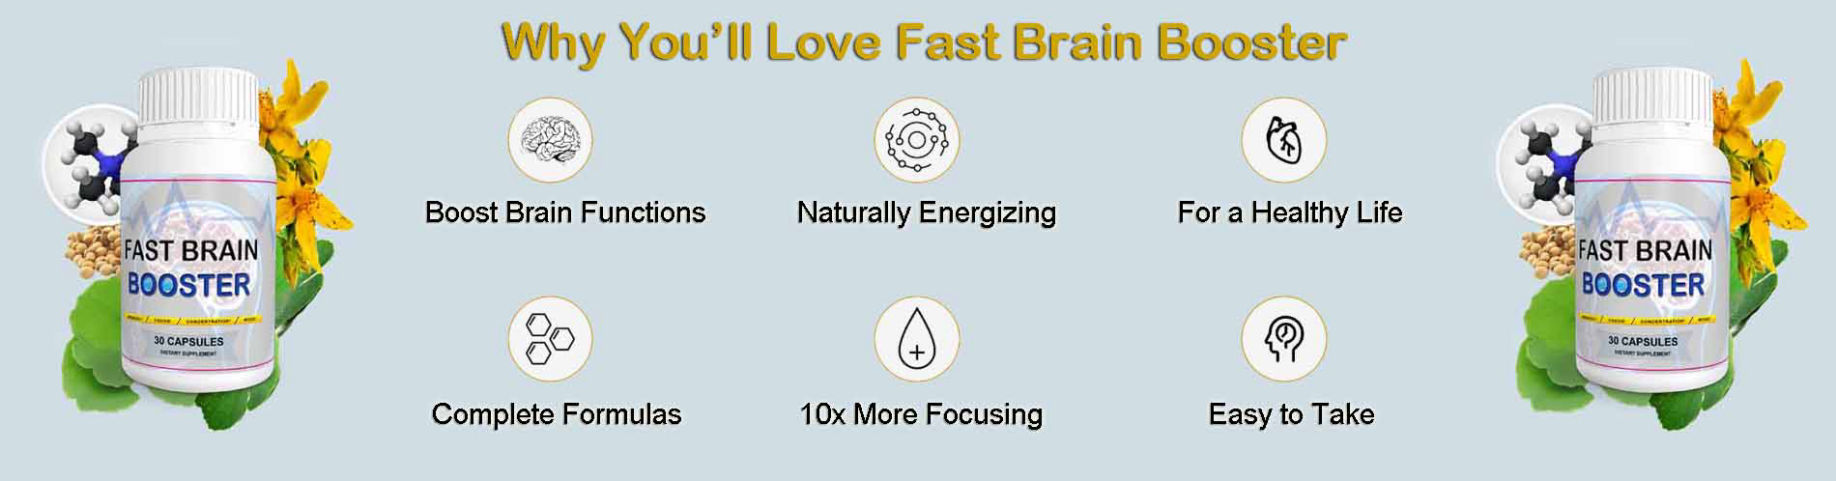 Fast Brain Booster benefit